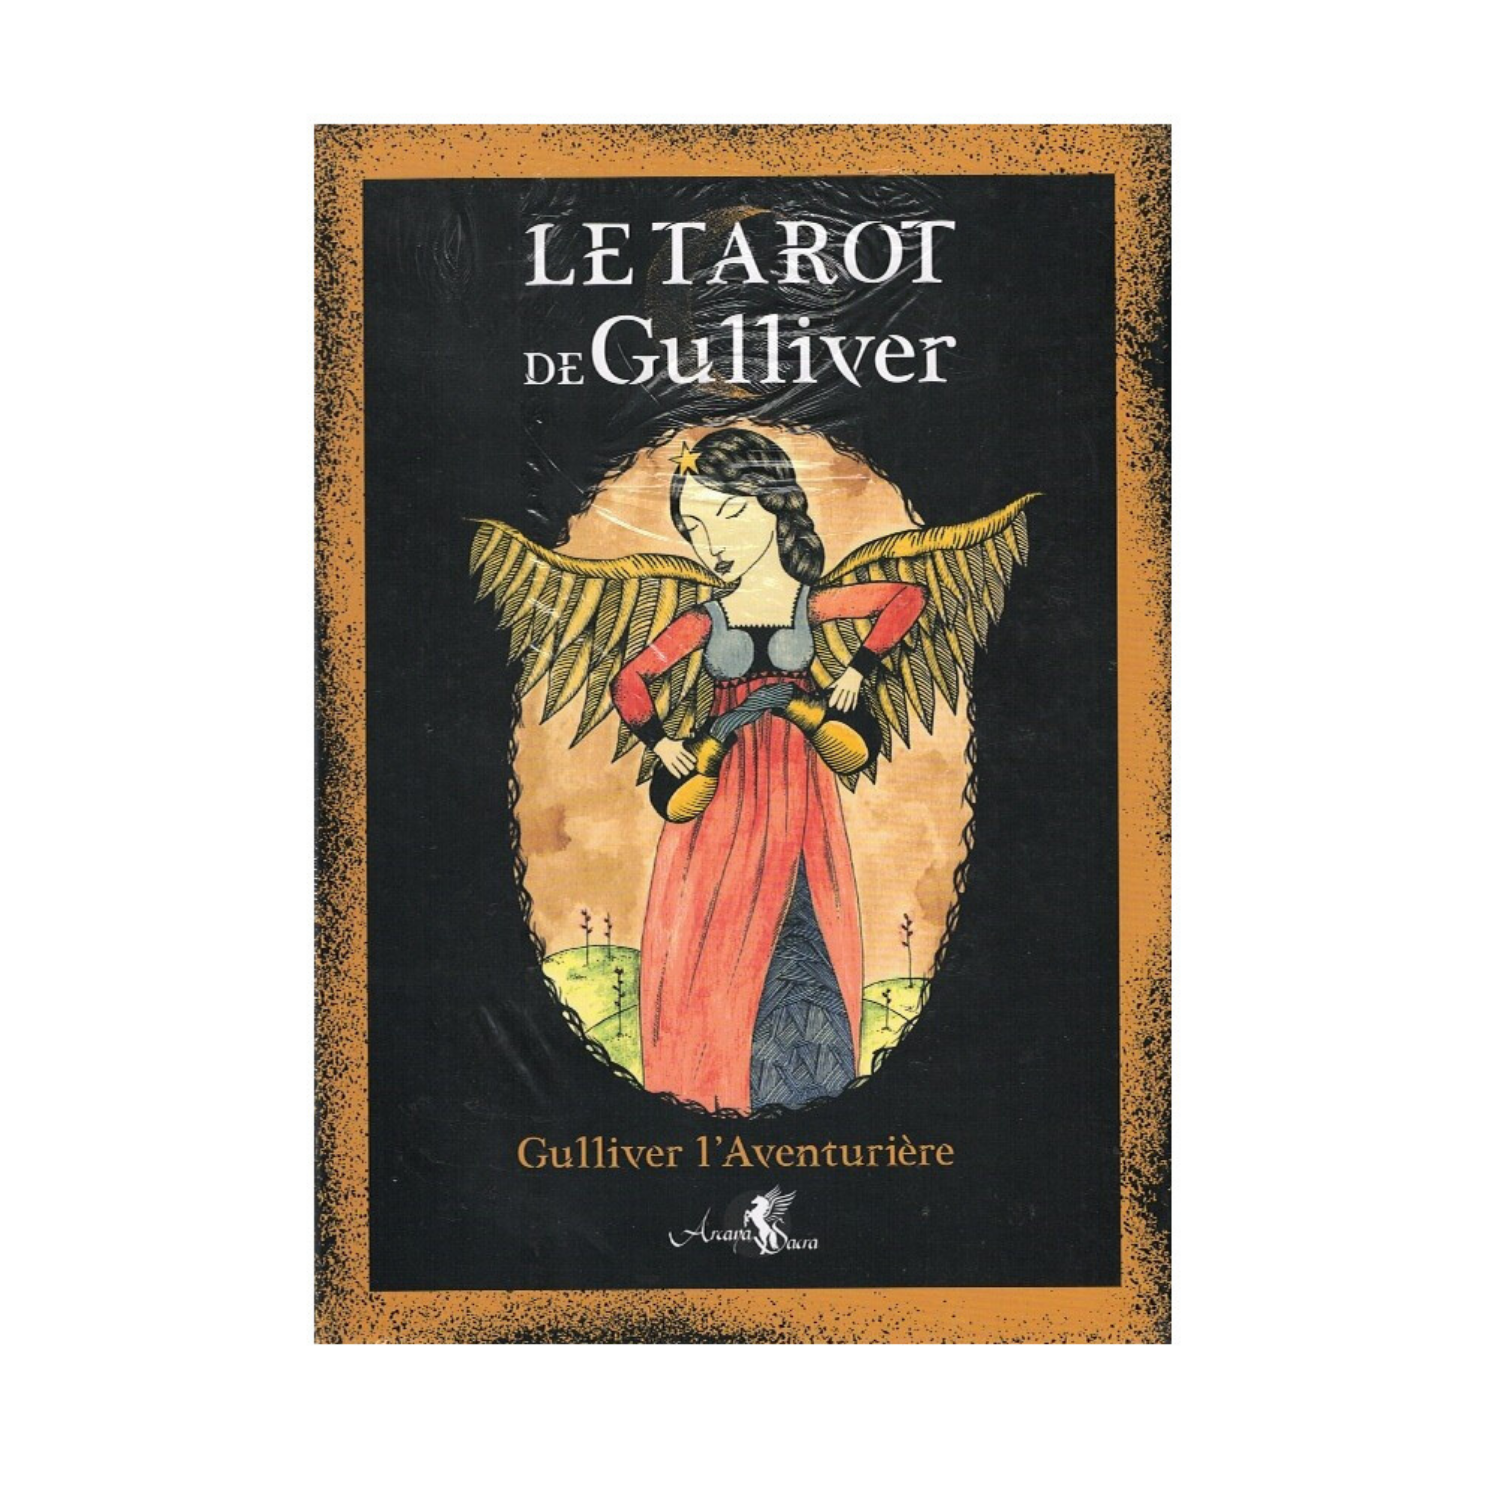 Le Tarot de Gulliver